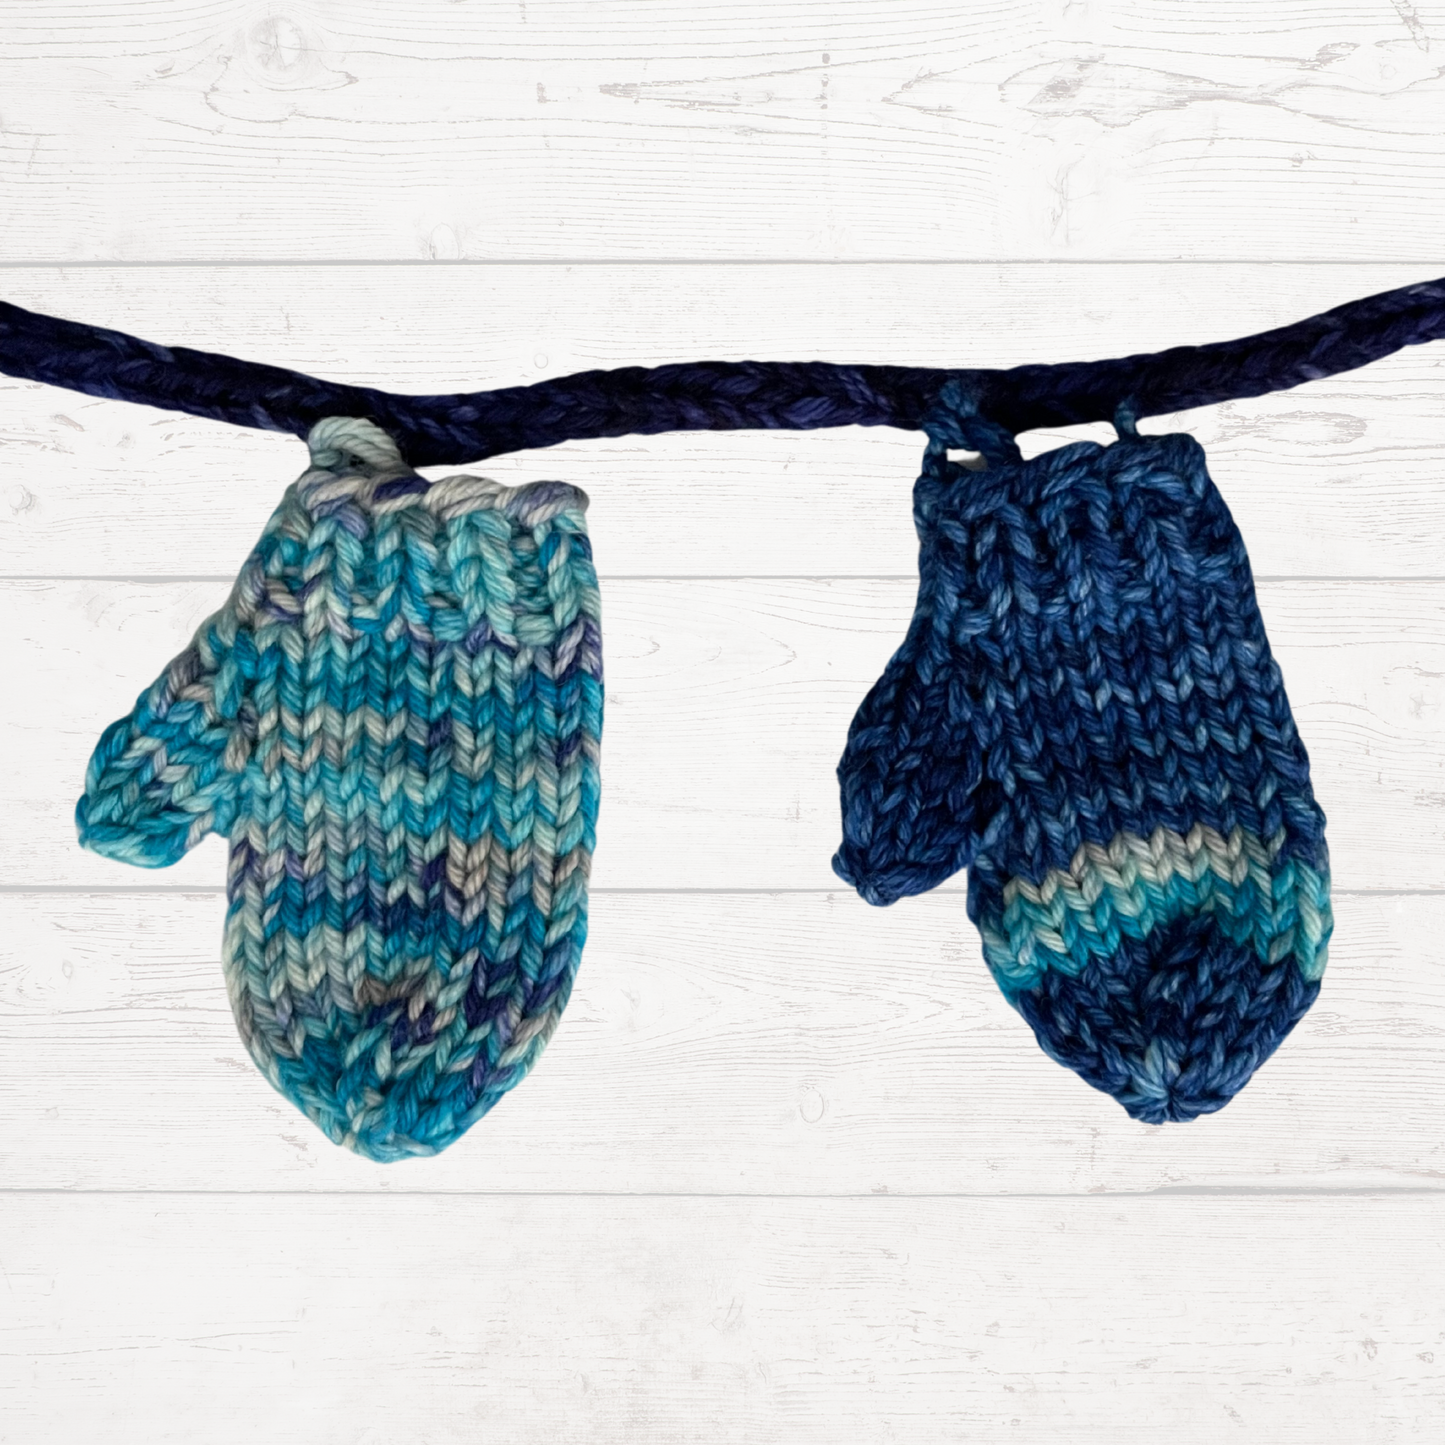 Winter Wonderland - A variegated hand dyed yarn